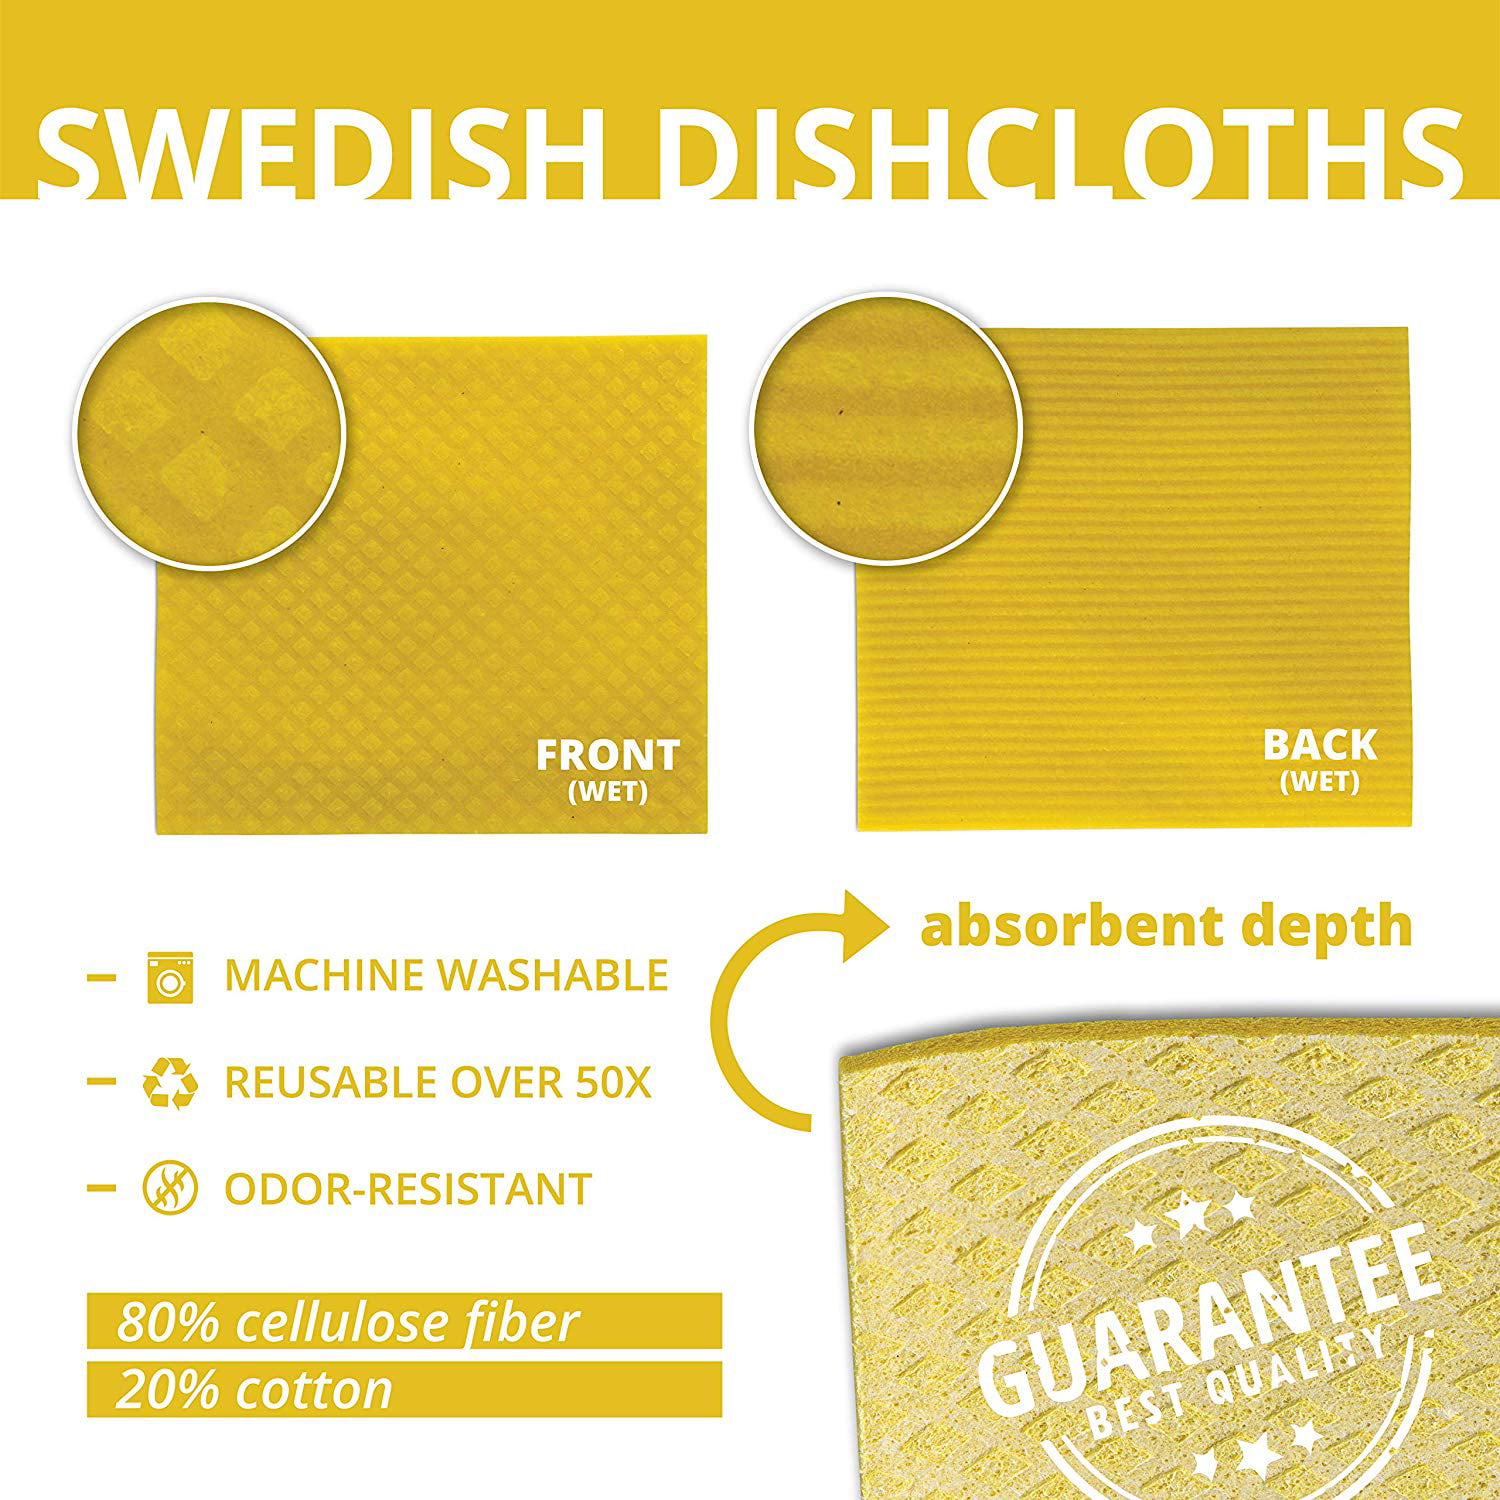 Swedish Eco-Friendly Dishcloth - Hebrew Cone Shells – Hawaiiverse